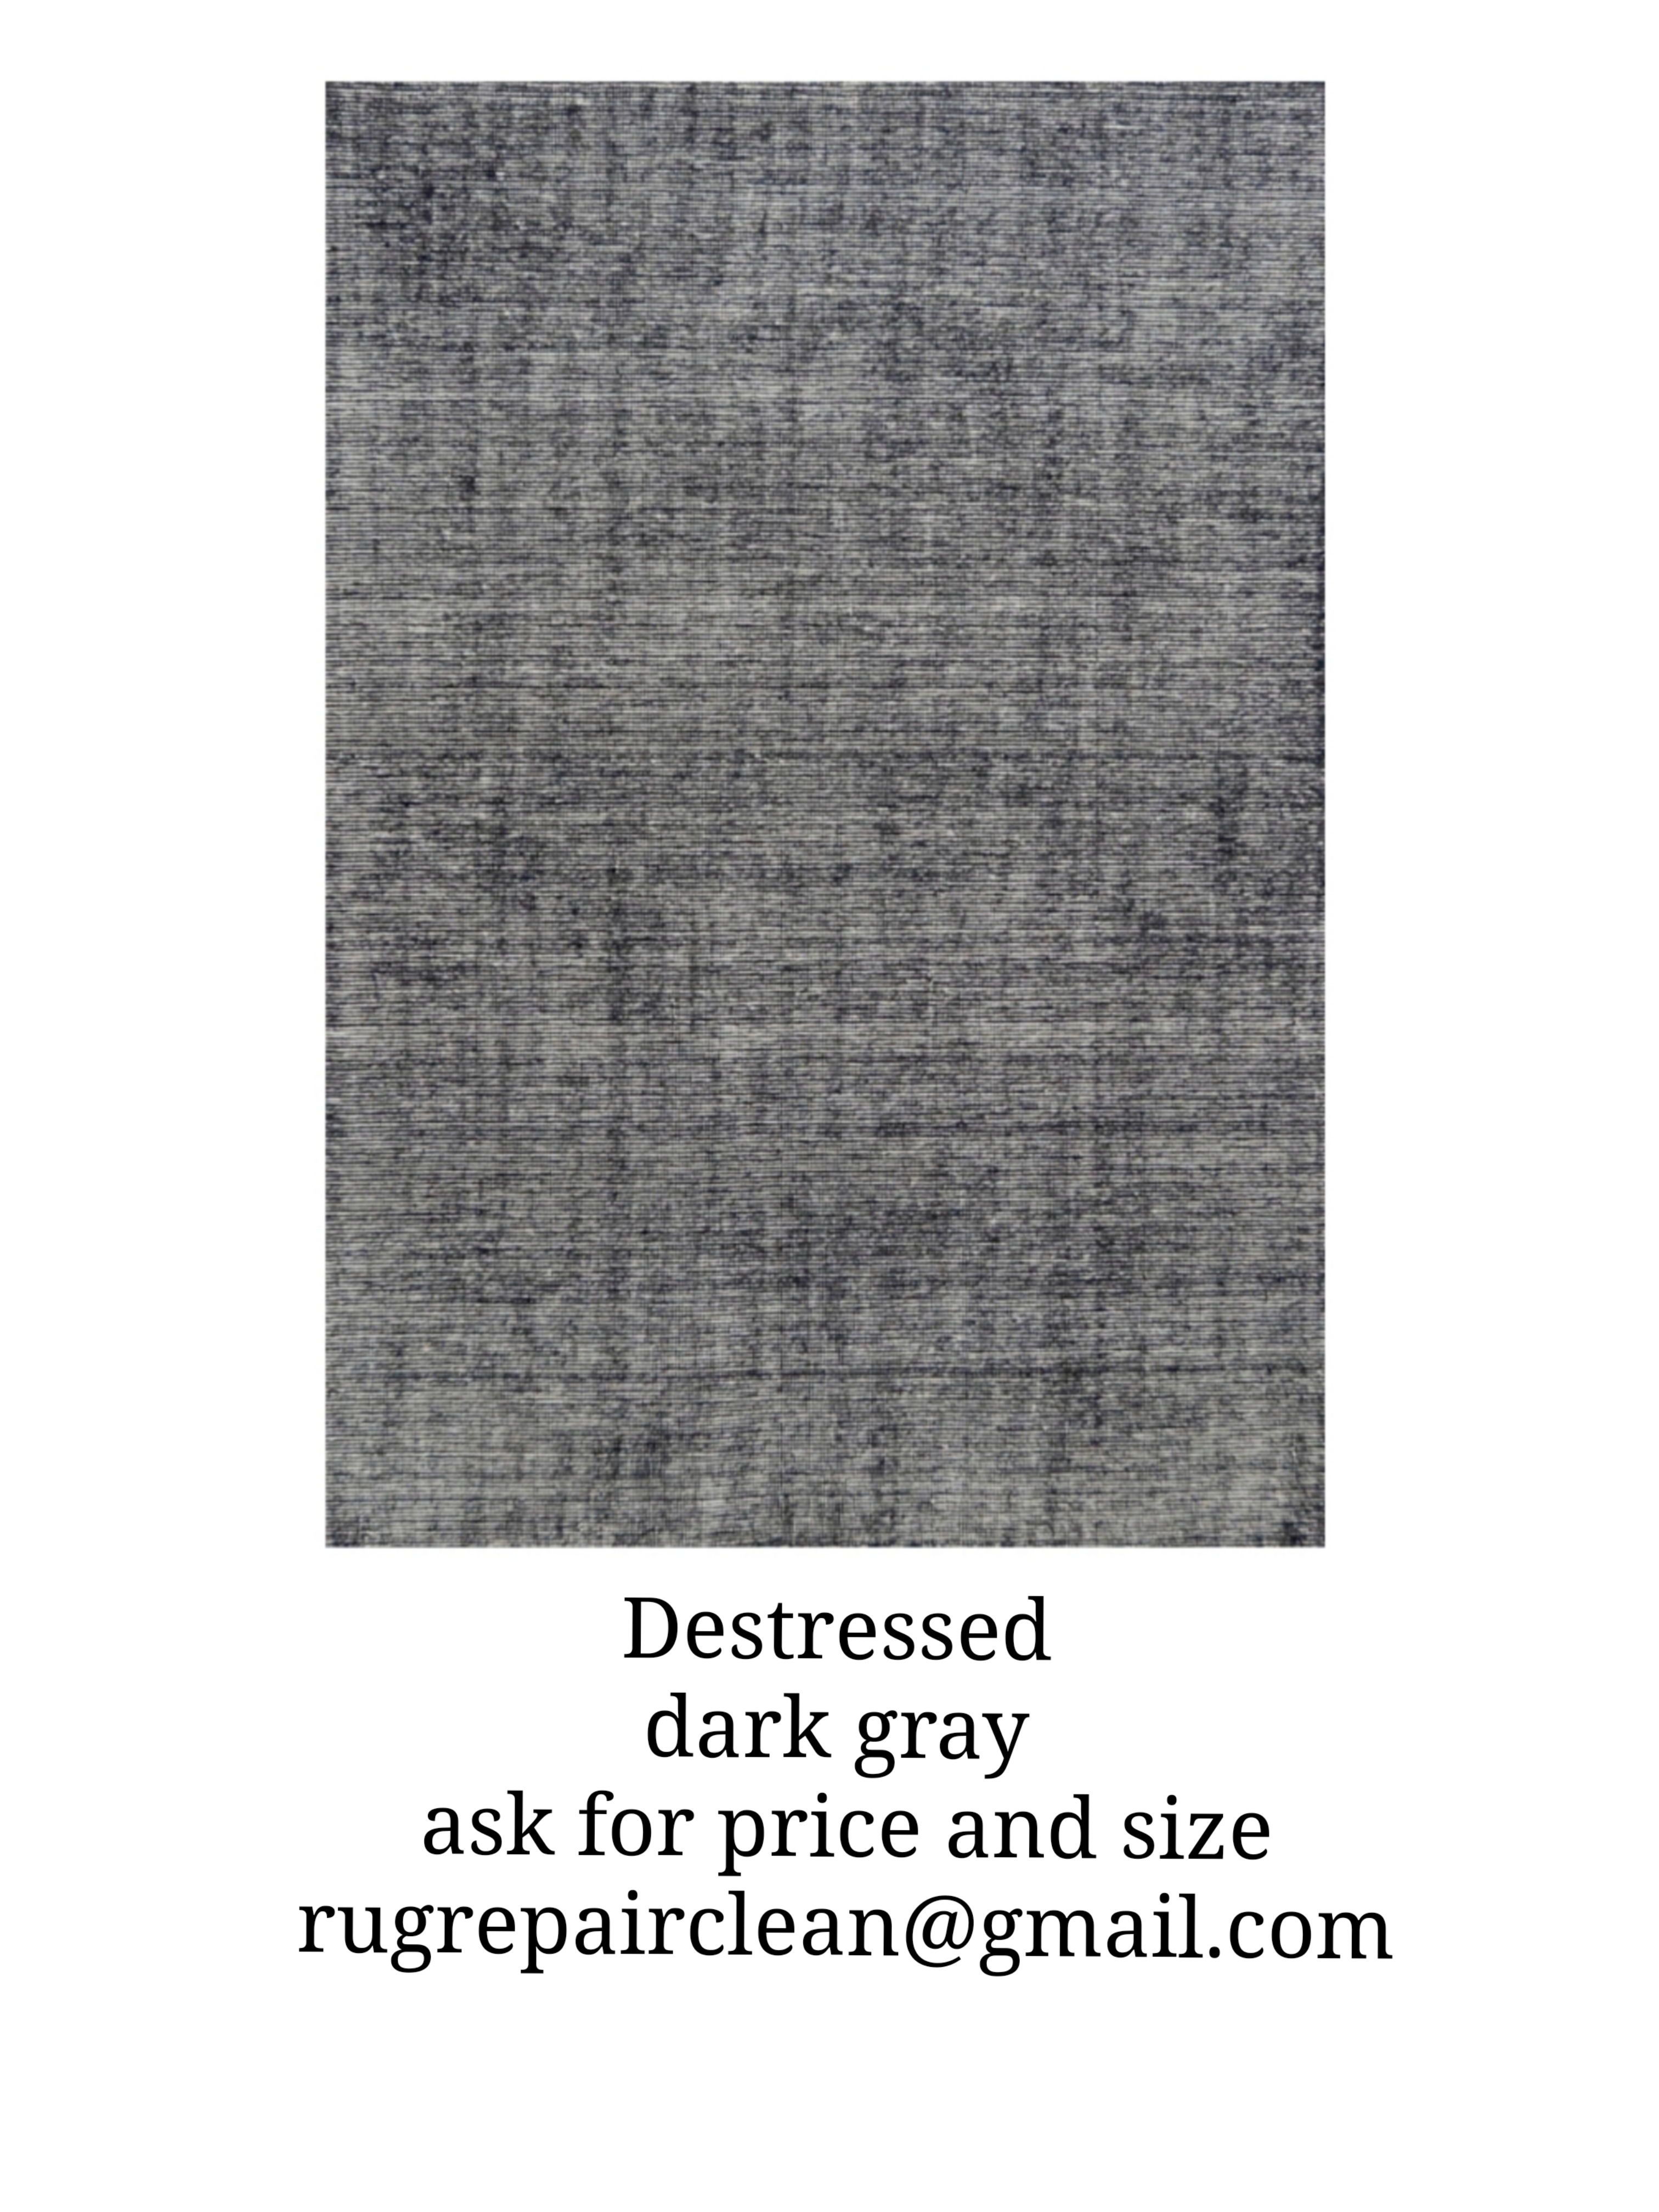 Dark gray distressed rug